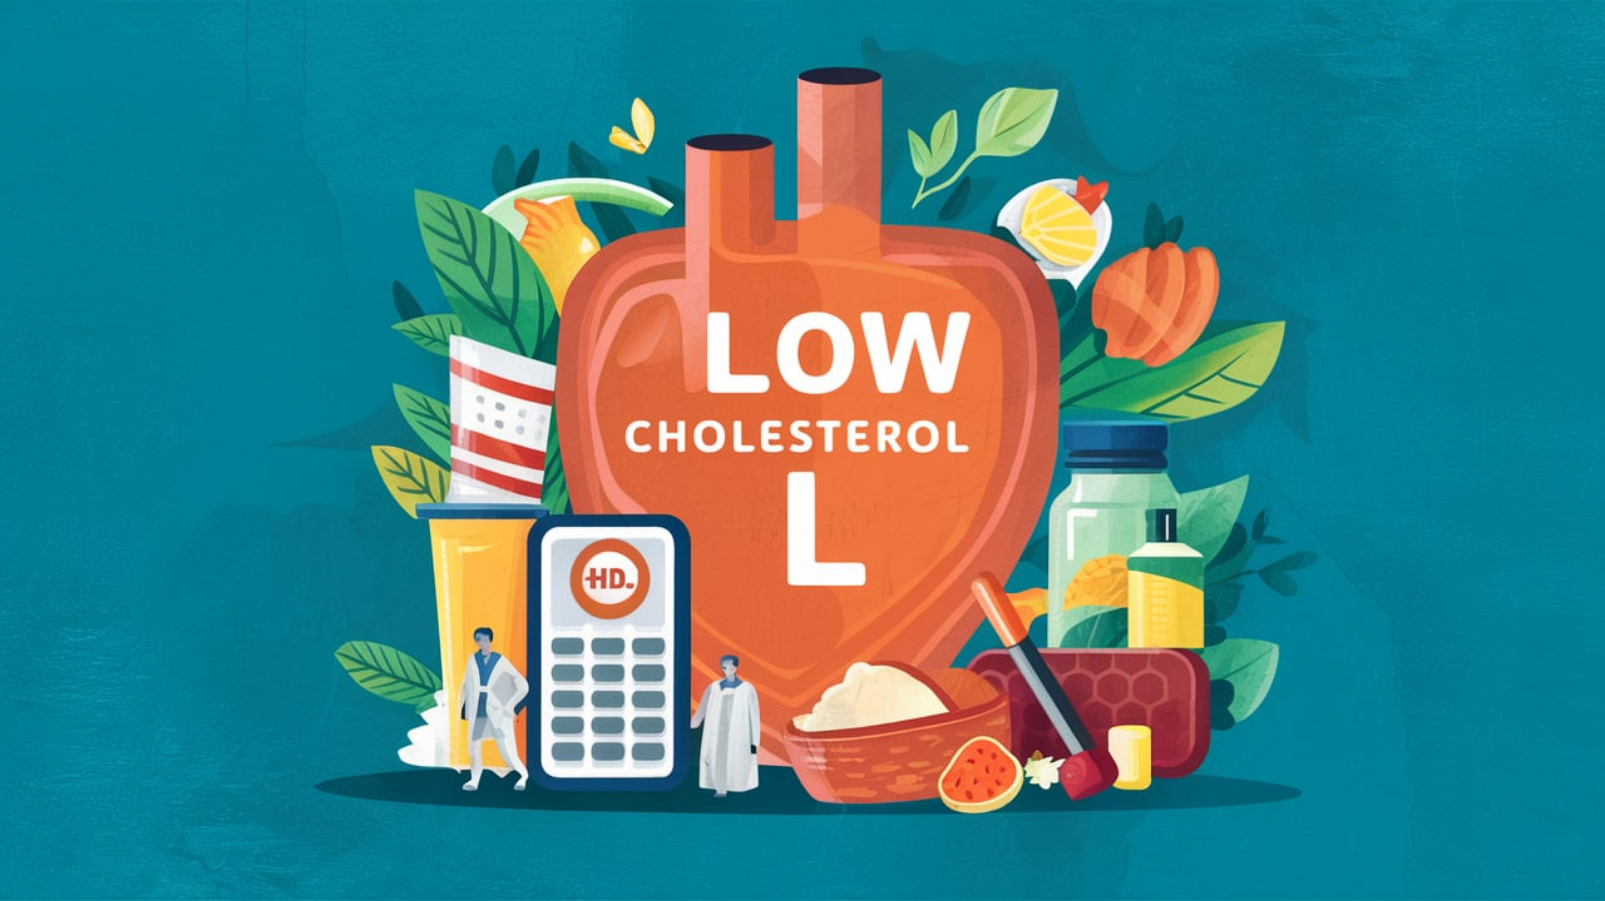 HDL 콜레스테롤 수치가 낮을 때 건강에 미치는 부정적인 영향은 무엇인가?